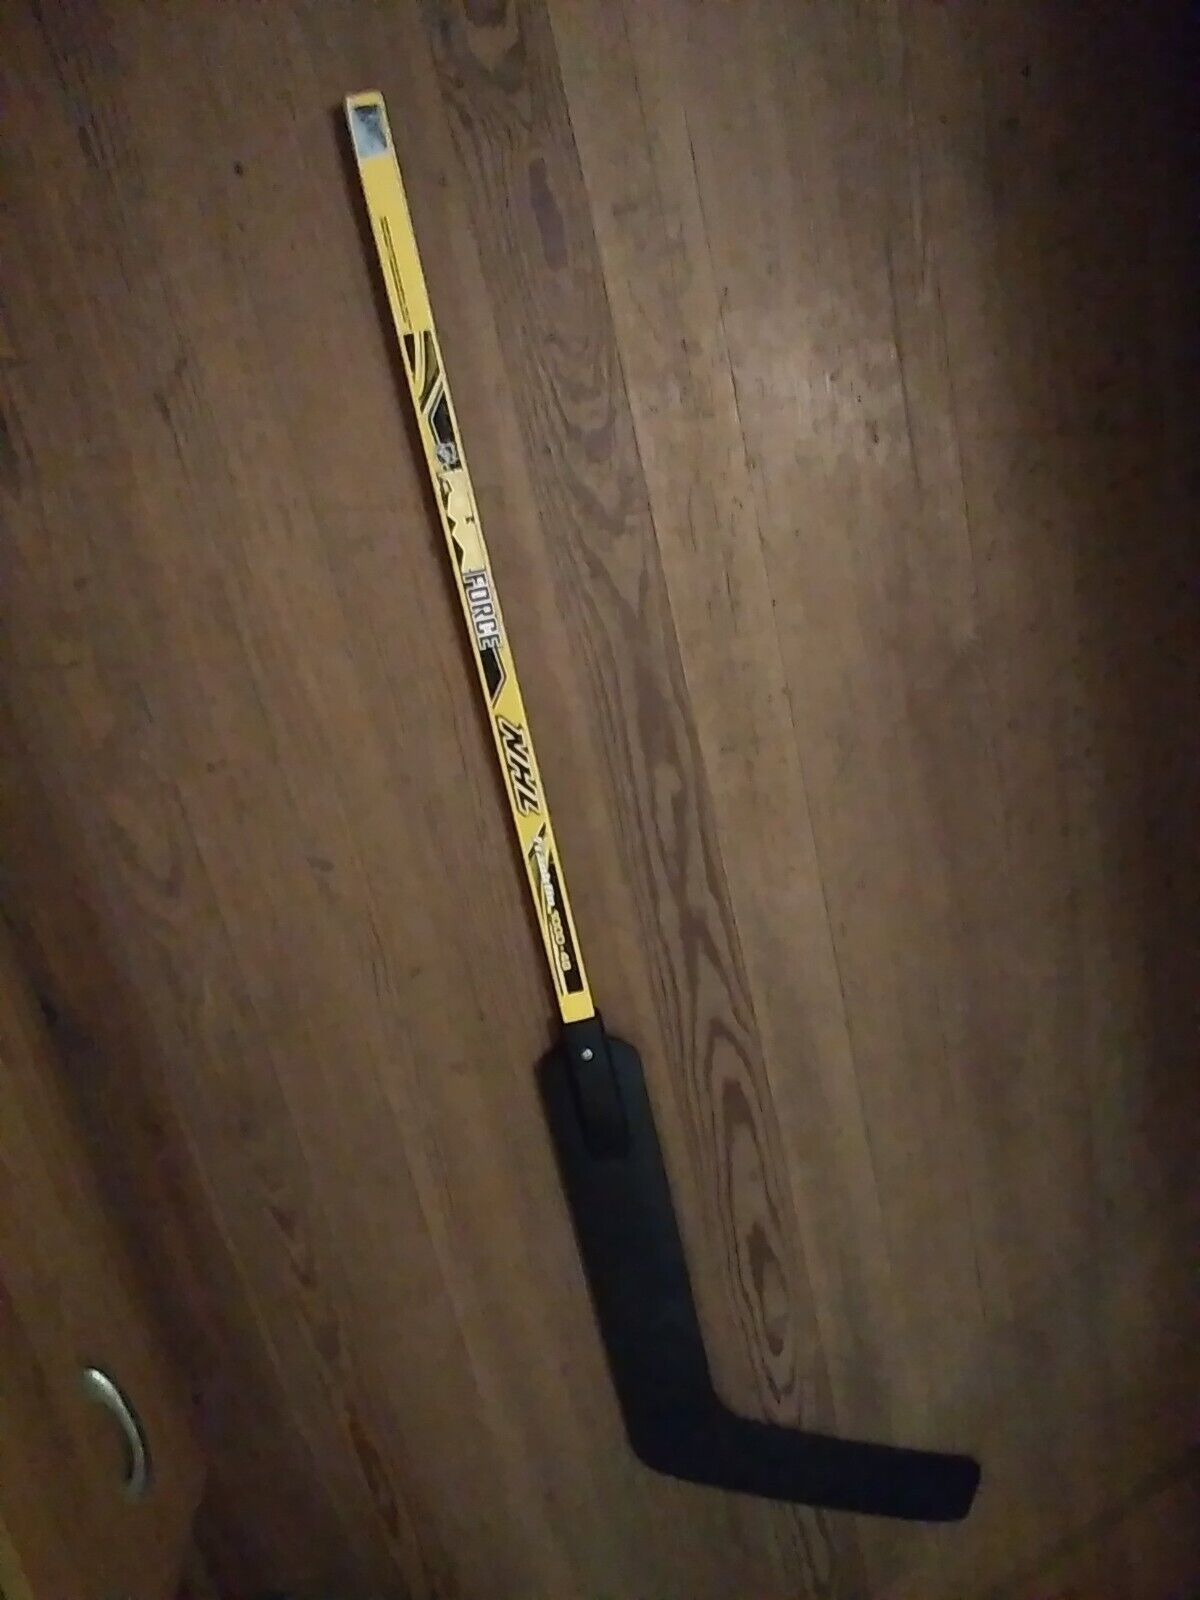 Franklin Nhl Hockey Power Force 1000-48 Goalie Stick, 56"